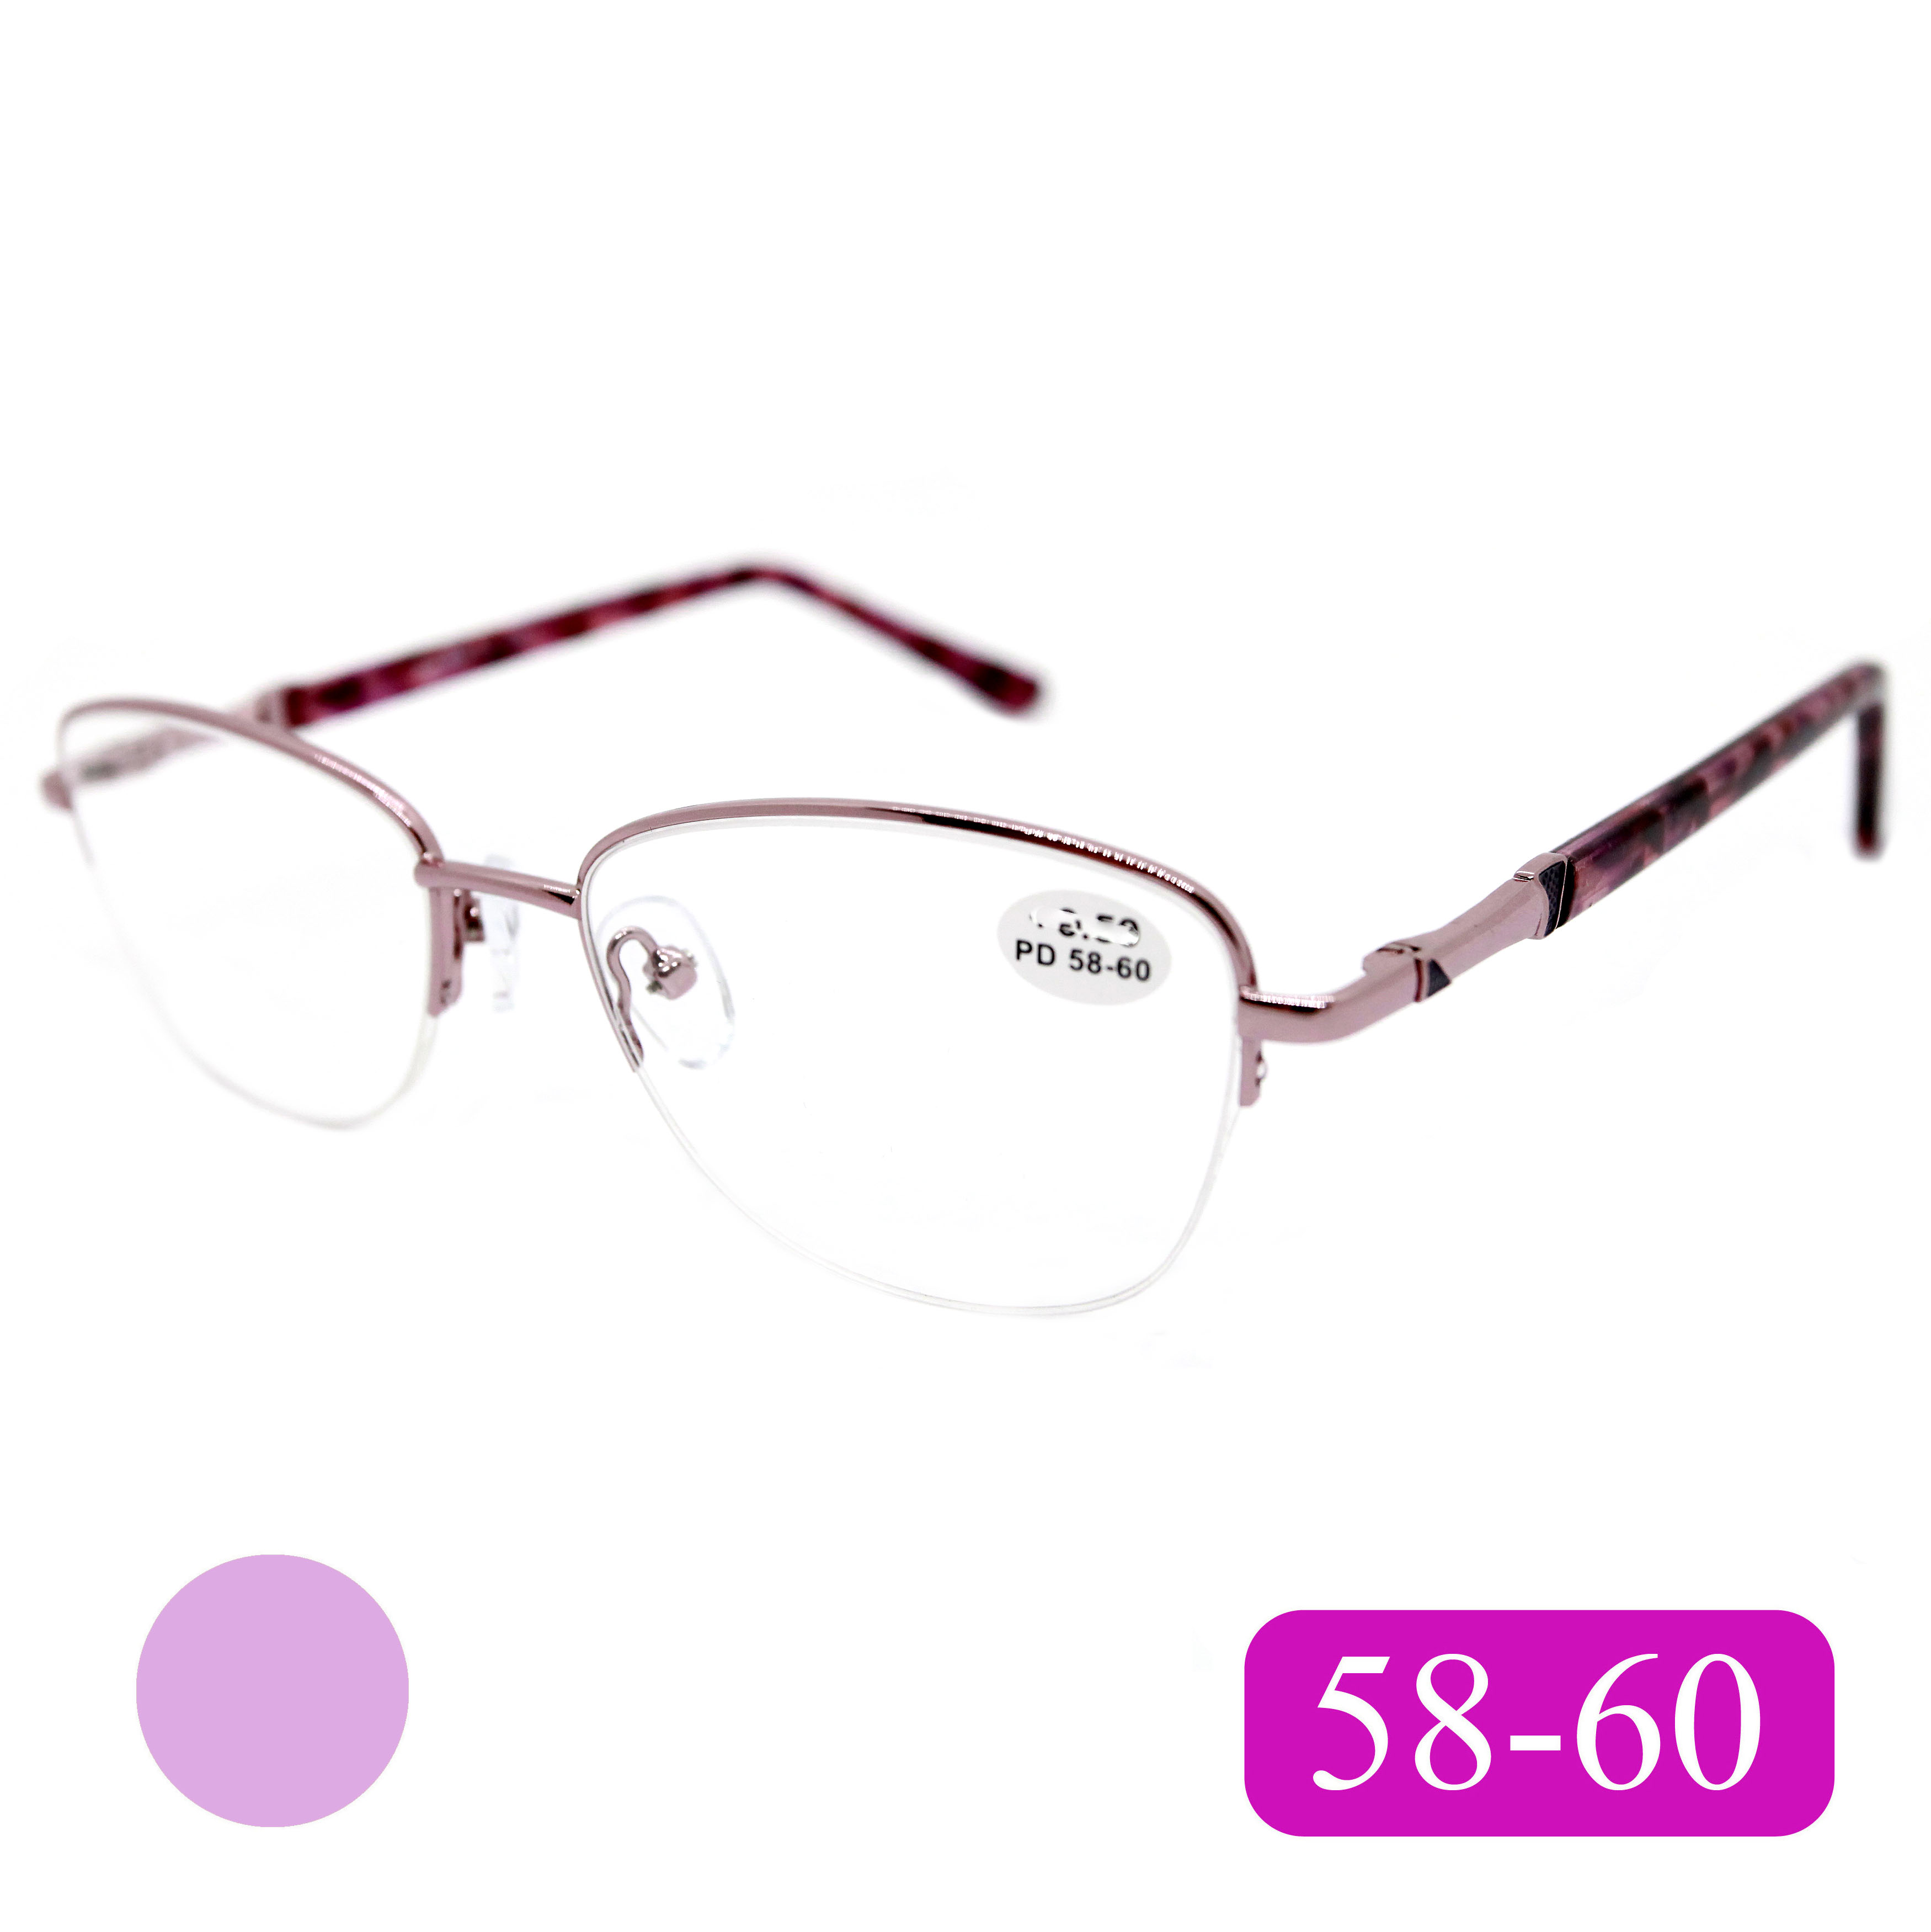 Готовые очки Fabia Monti 8920 +0.50, без футляра, цвет фиолетовый, РЦ 58-60